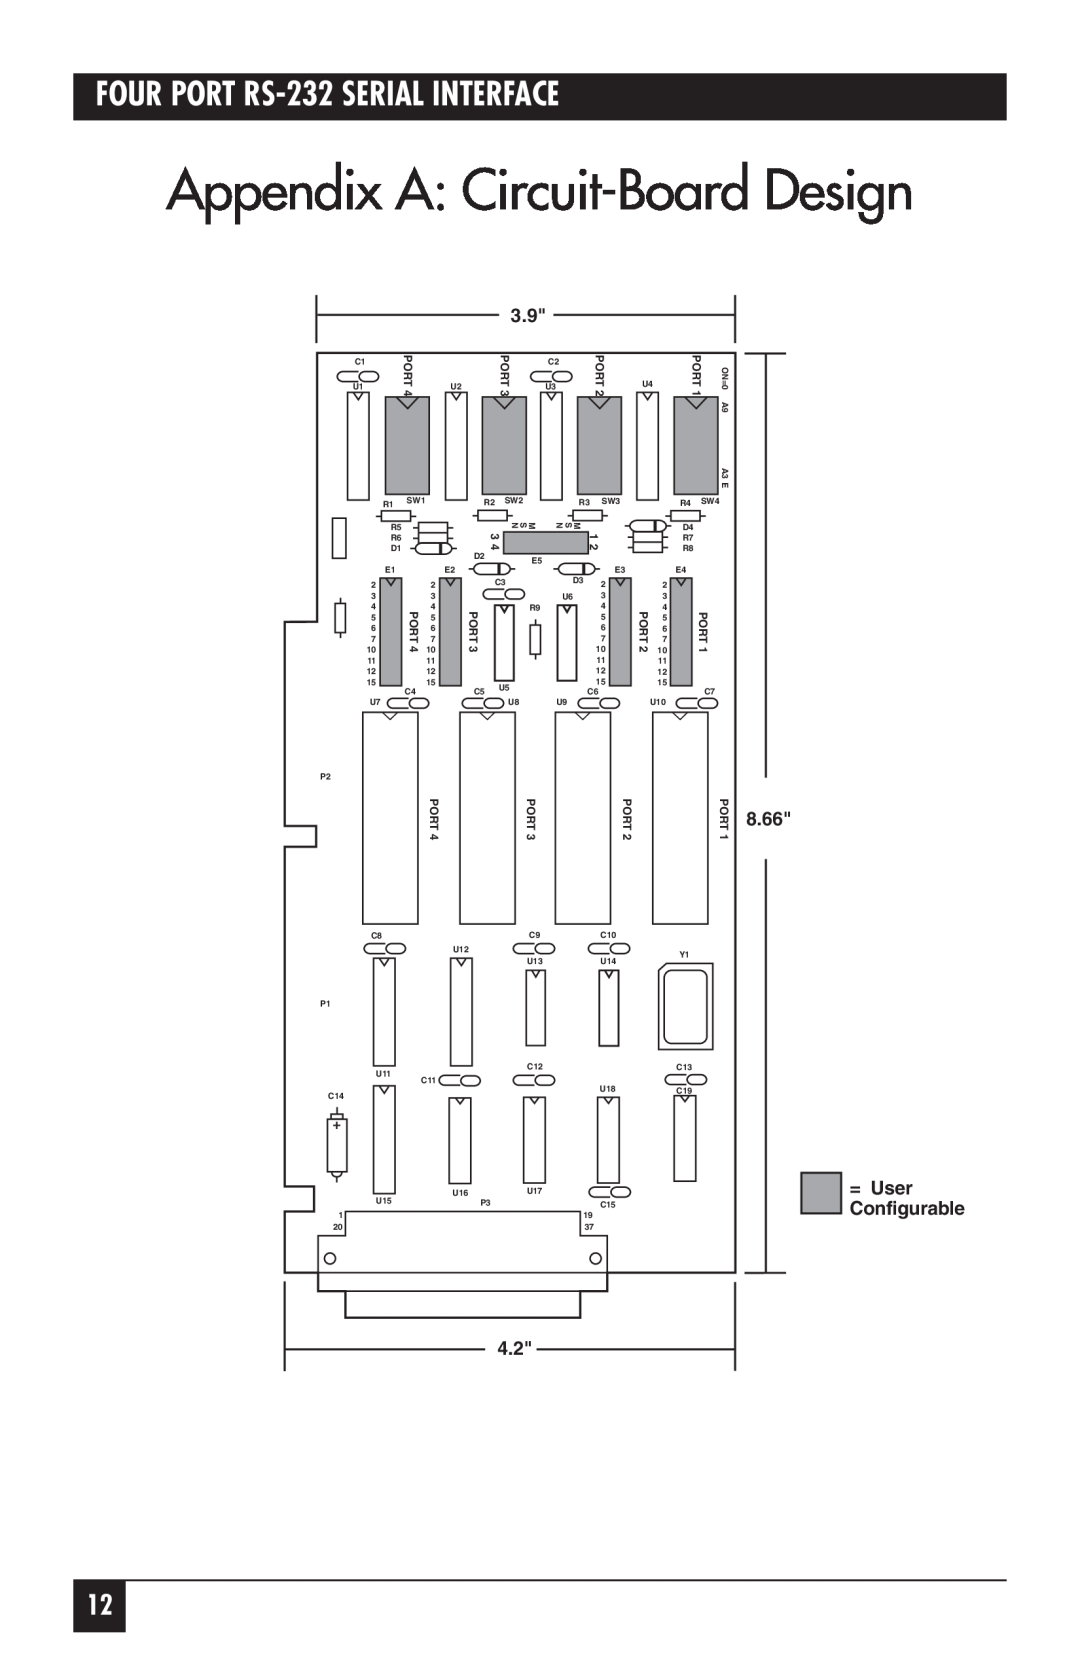 Black Box IC181C manual Appendix A Circuit-Board Design, FOUR PORT RS-232 SERIAL INTERFACE, 8.66, 10 4, Port 